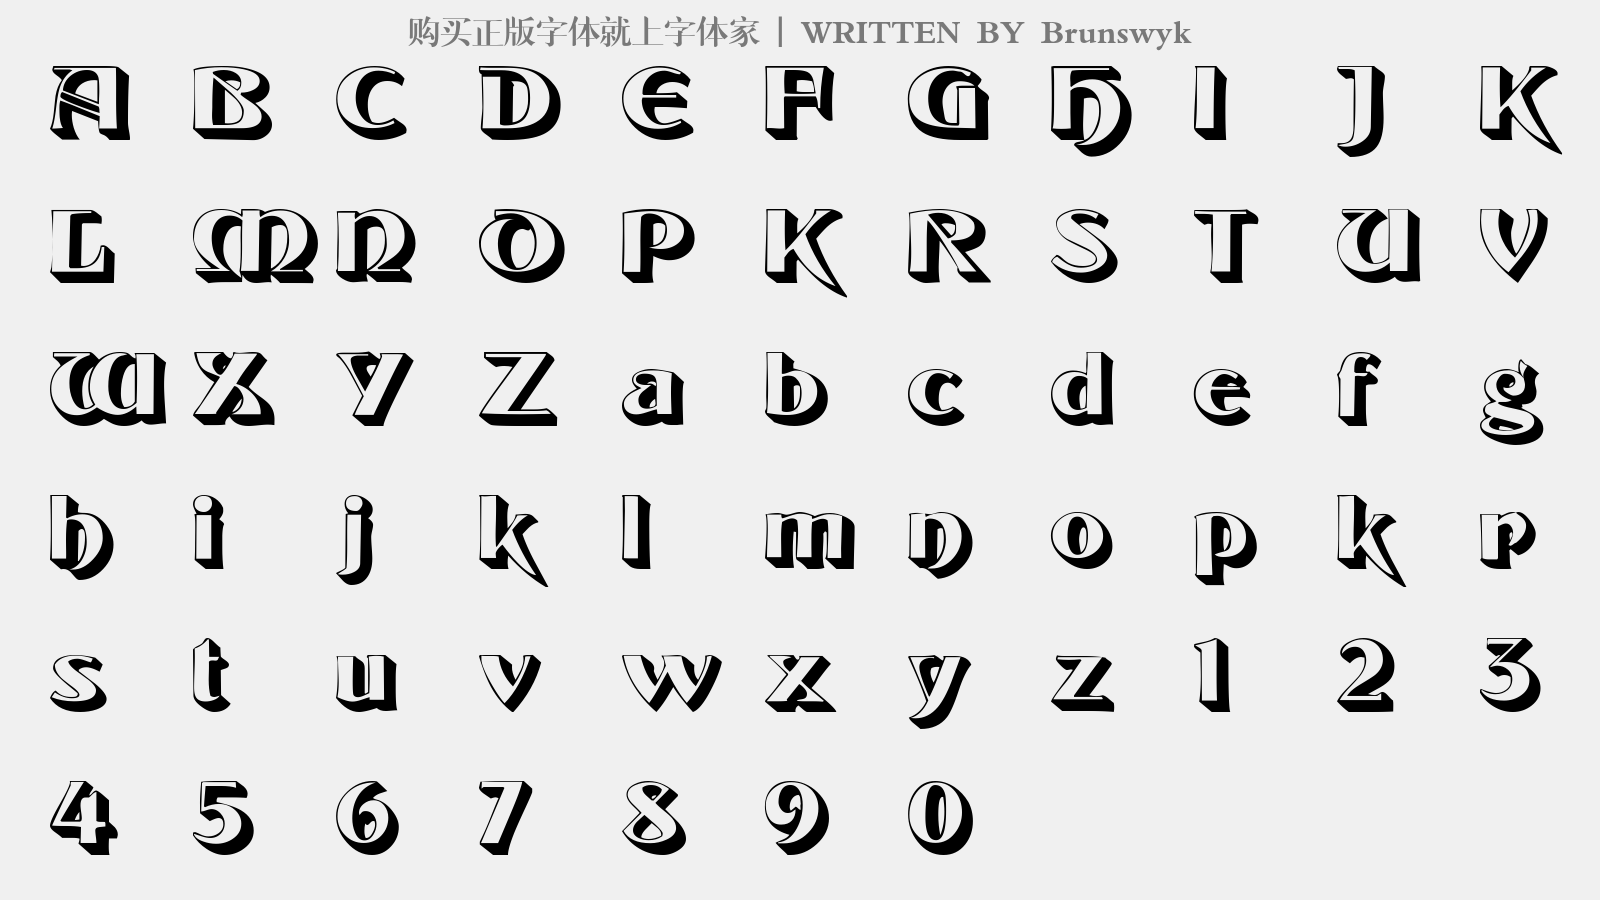 Brunswyk - 大写字母/小写字母/数字